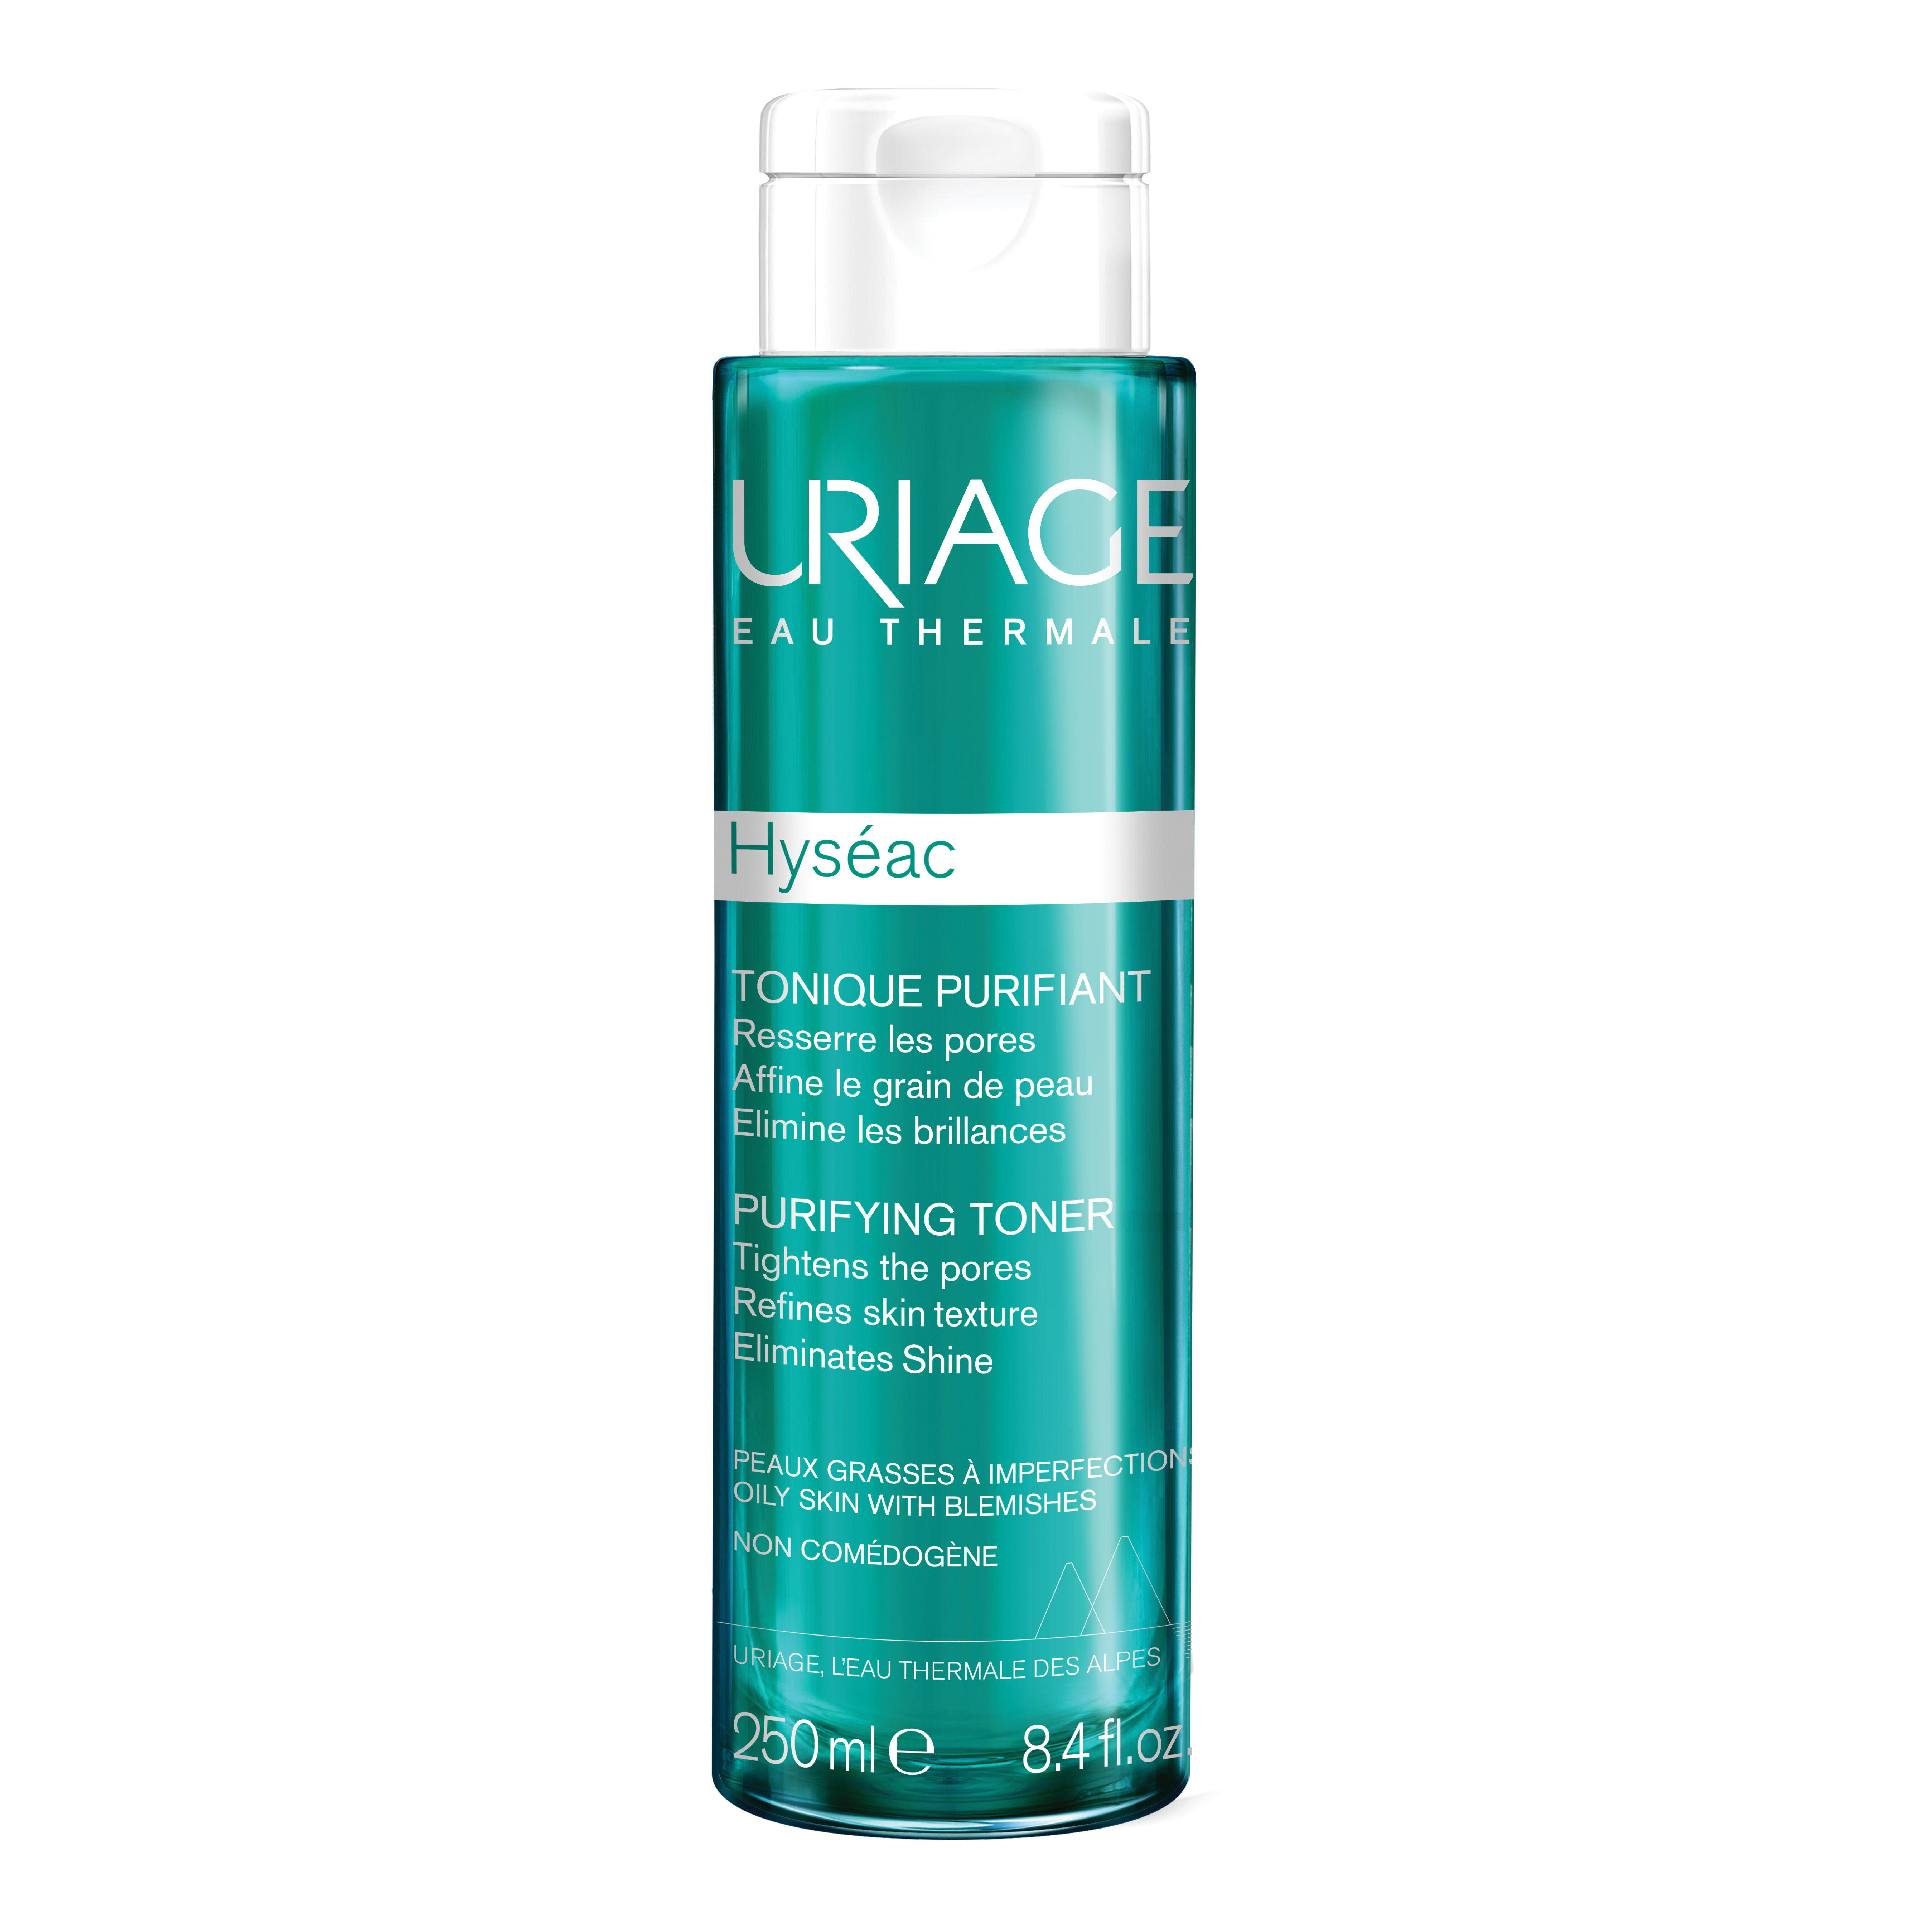 Uriage Hyseac tonico purificante250ml